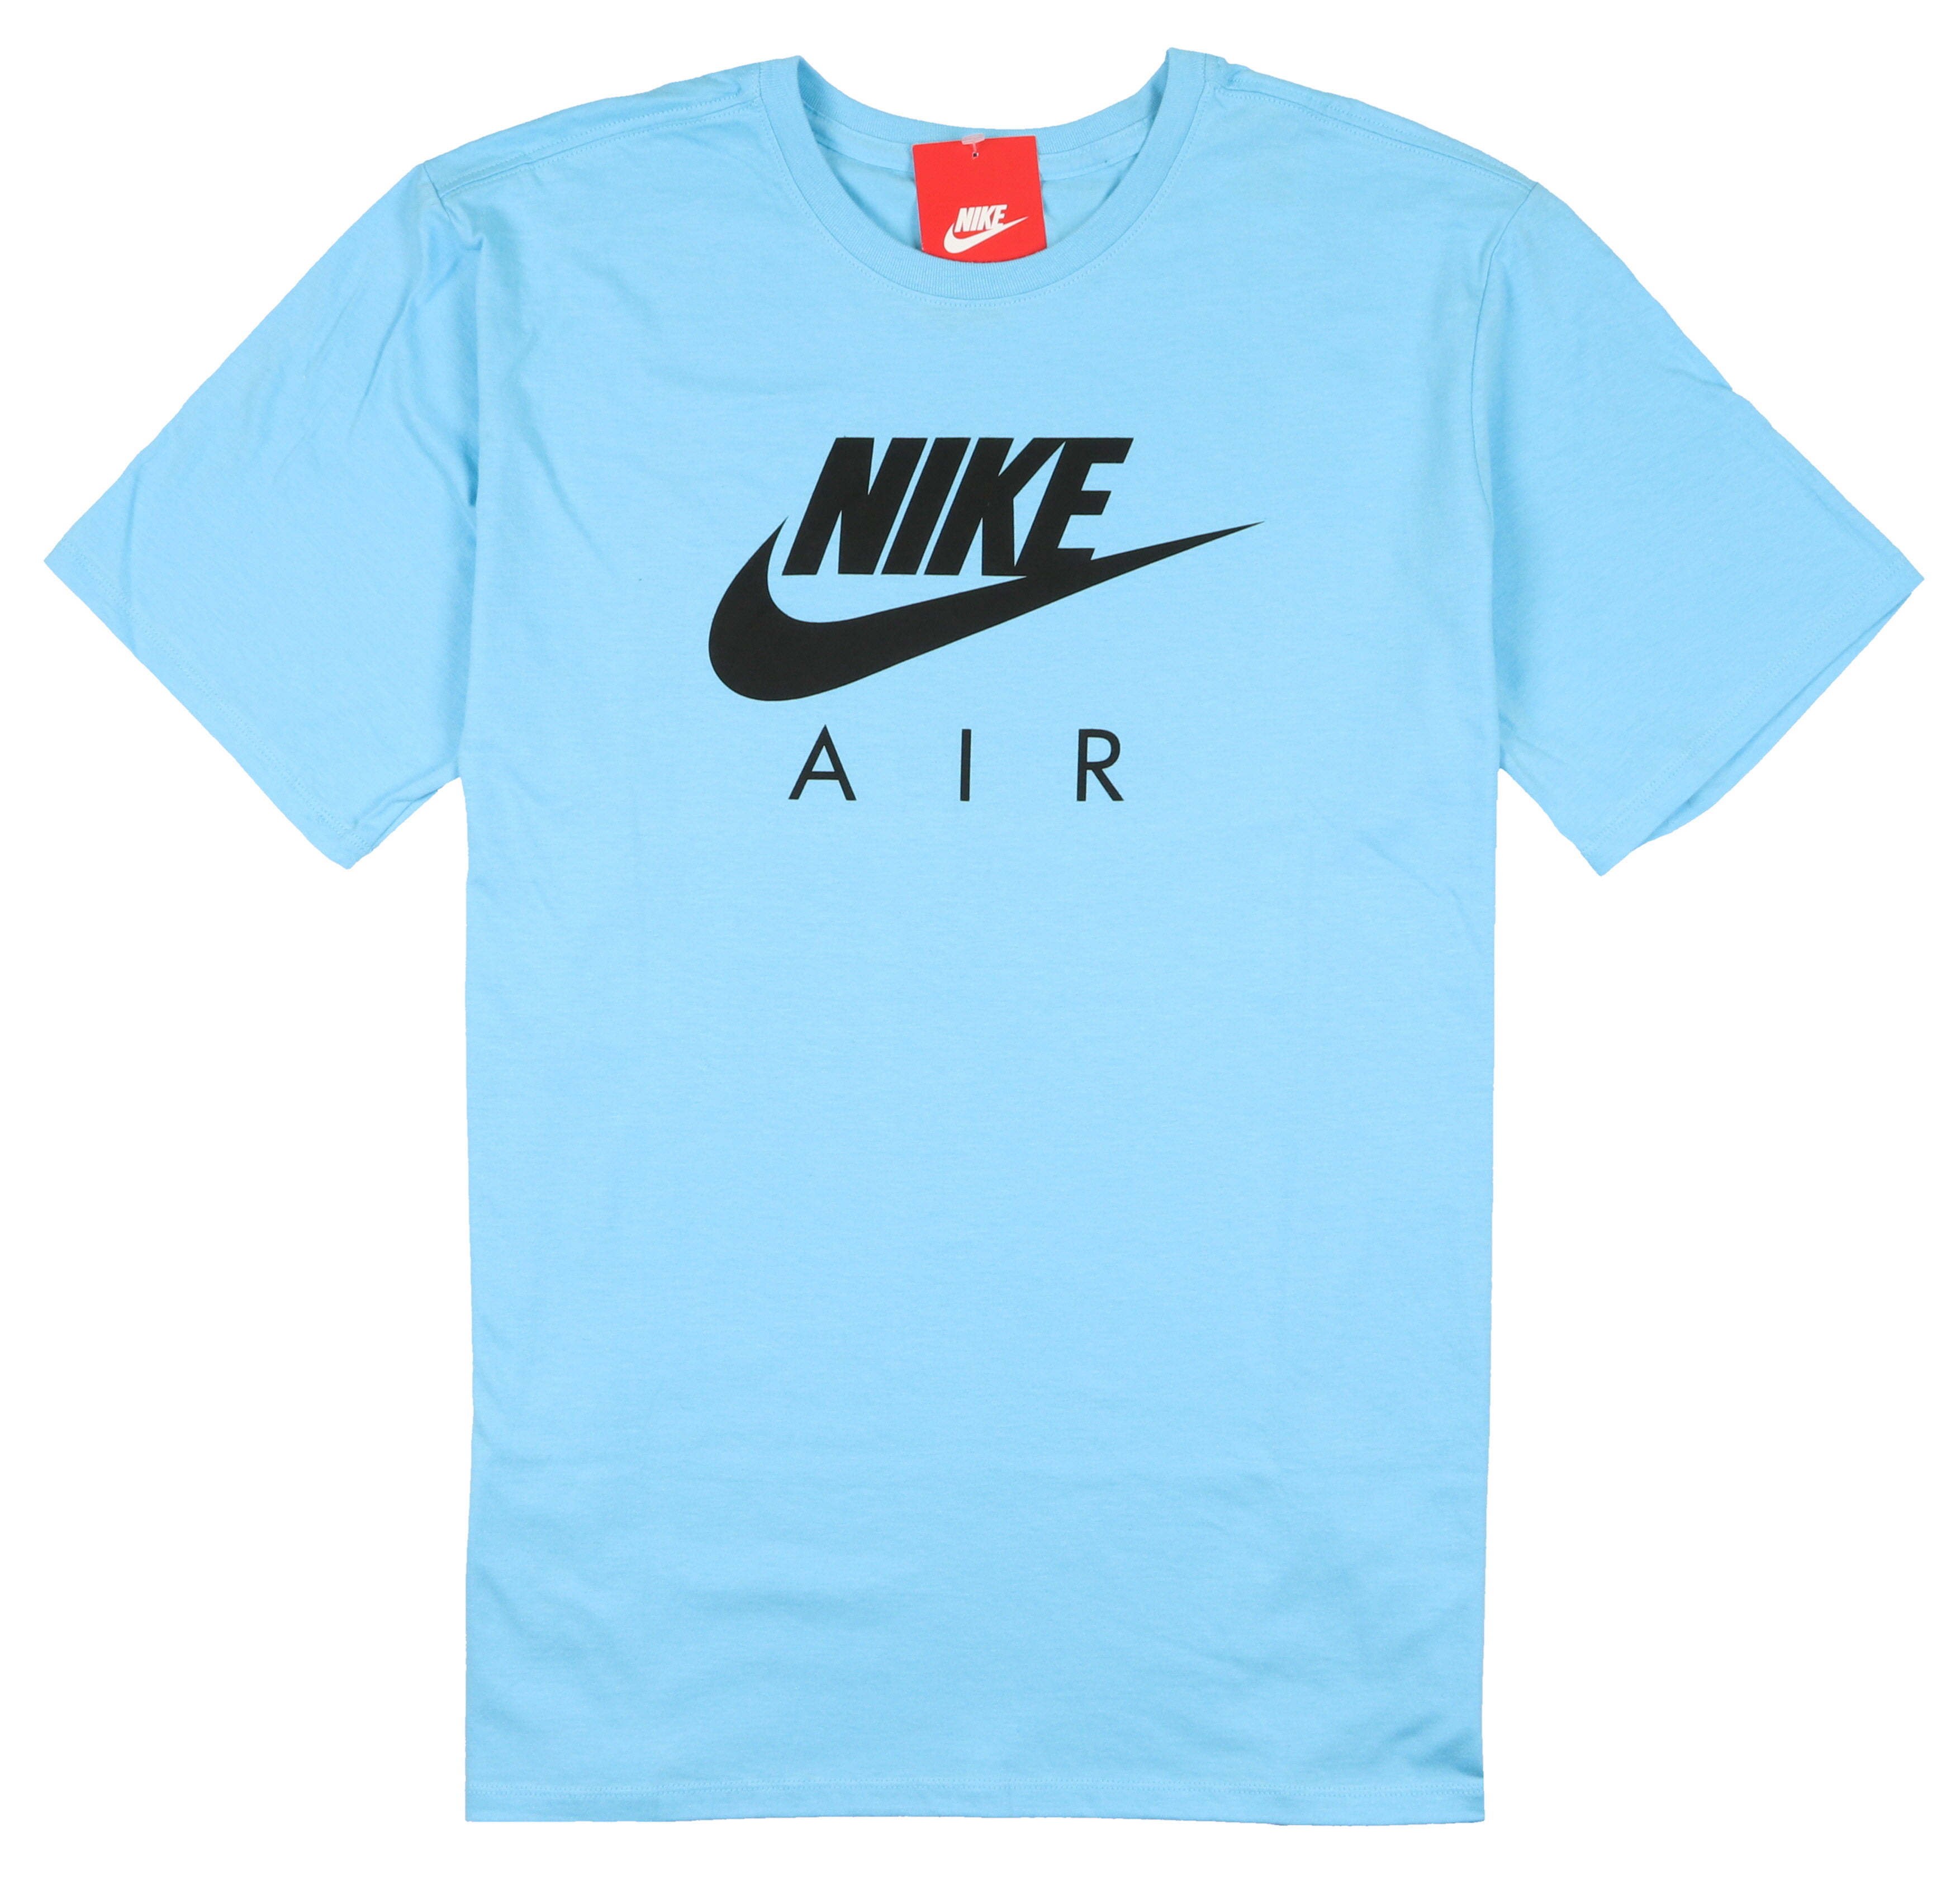 Buy > sky blue nike shirt > in stock